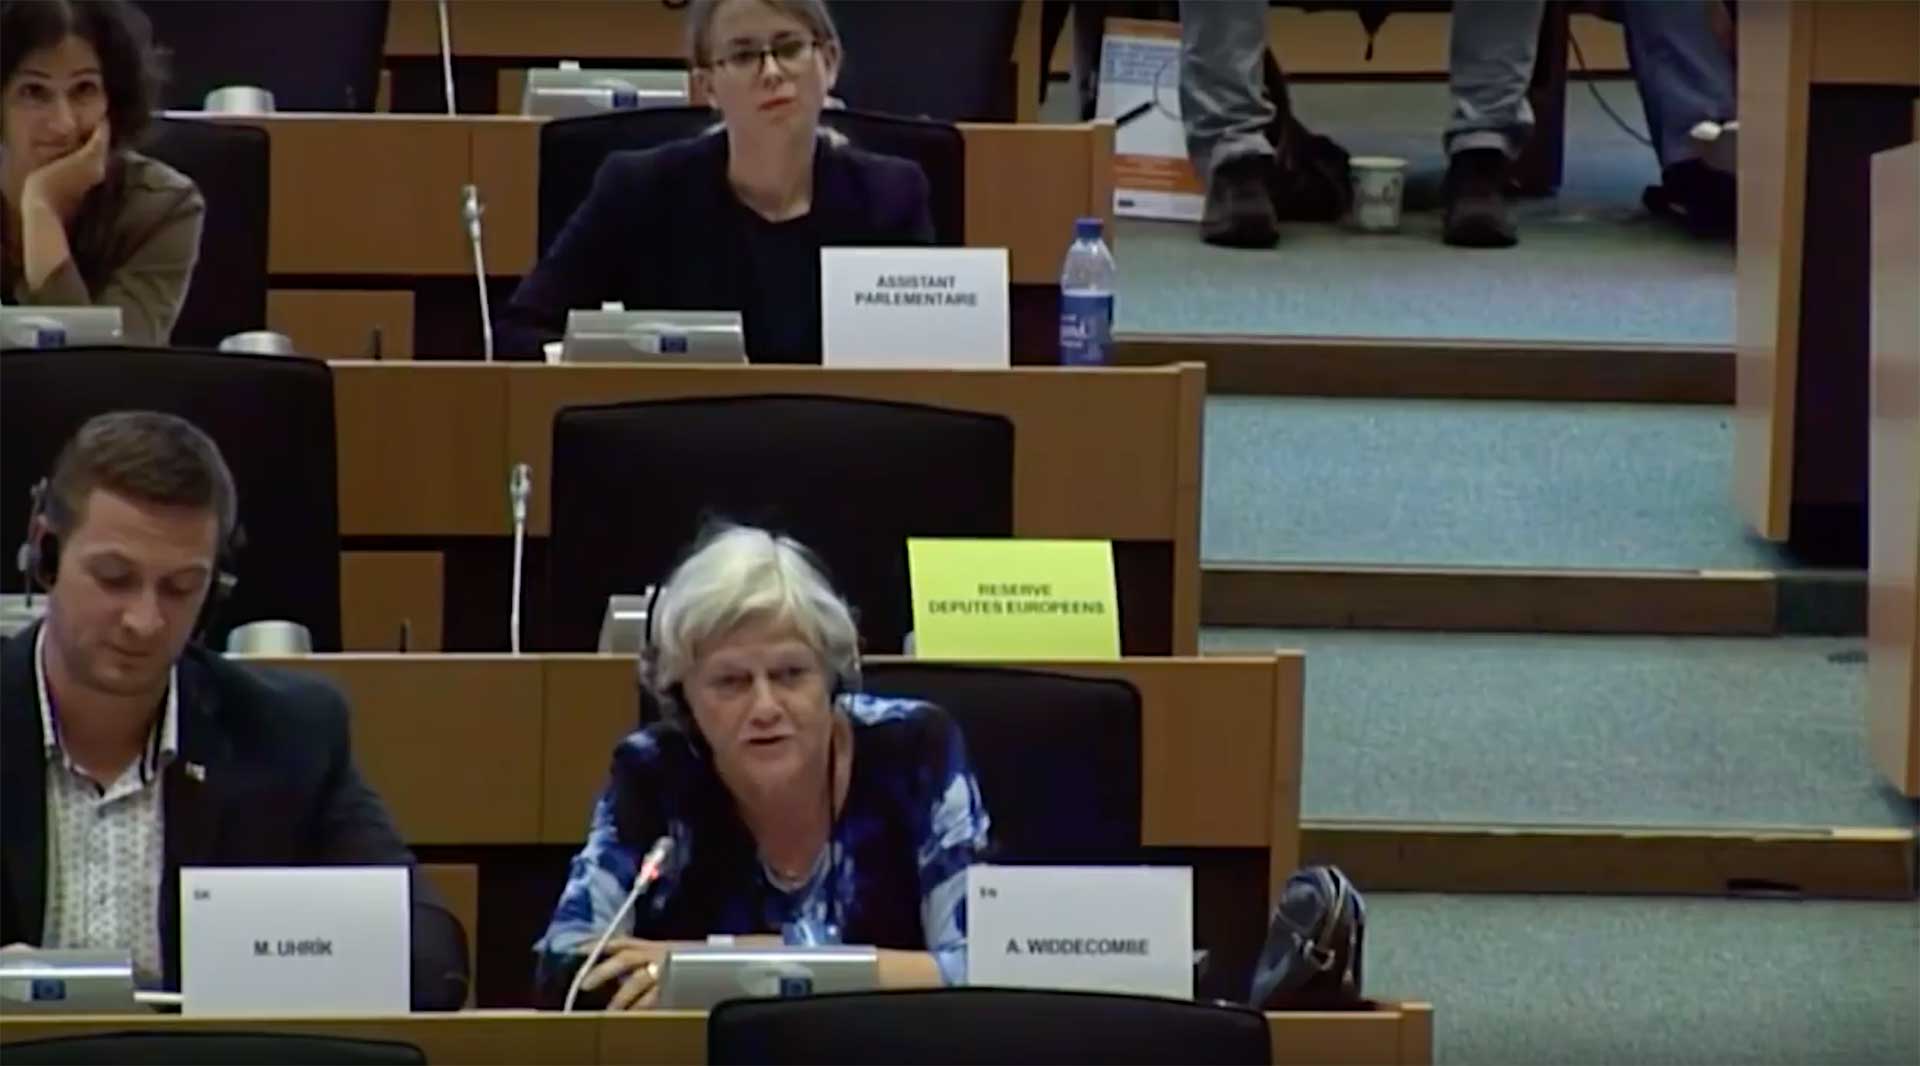 Ann speaking at the EU in Strasbourg